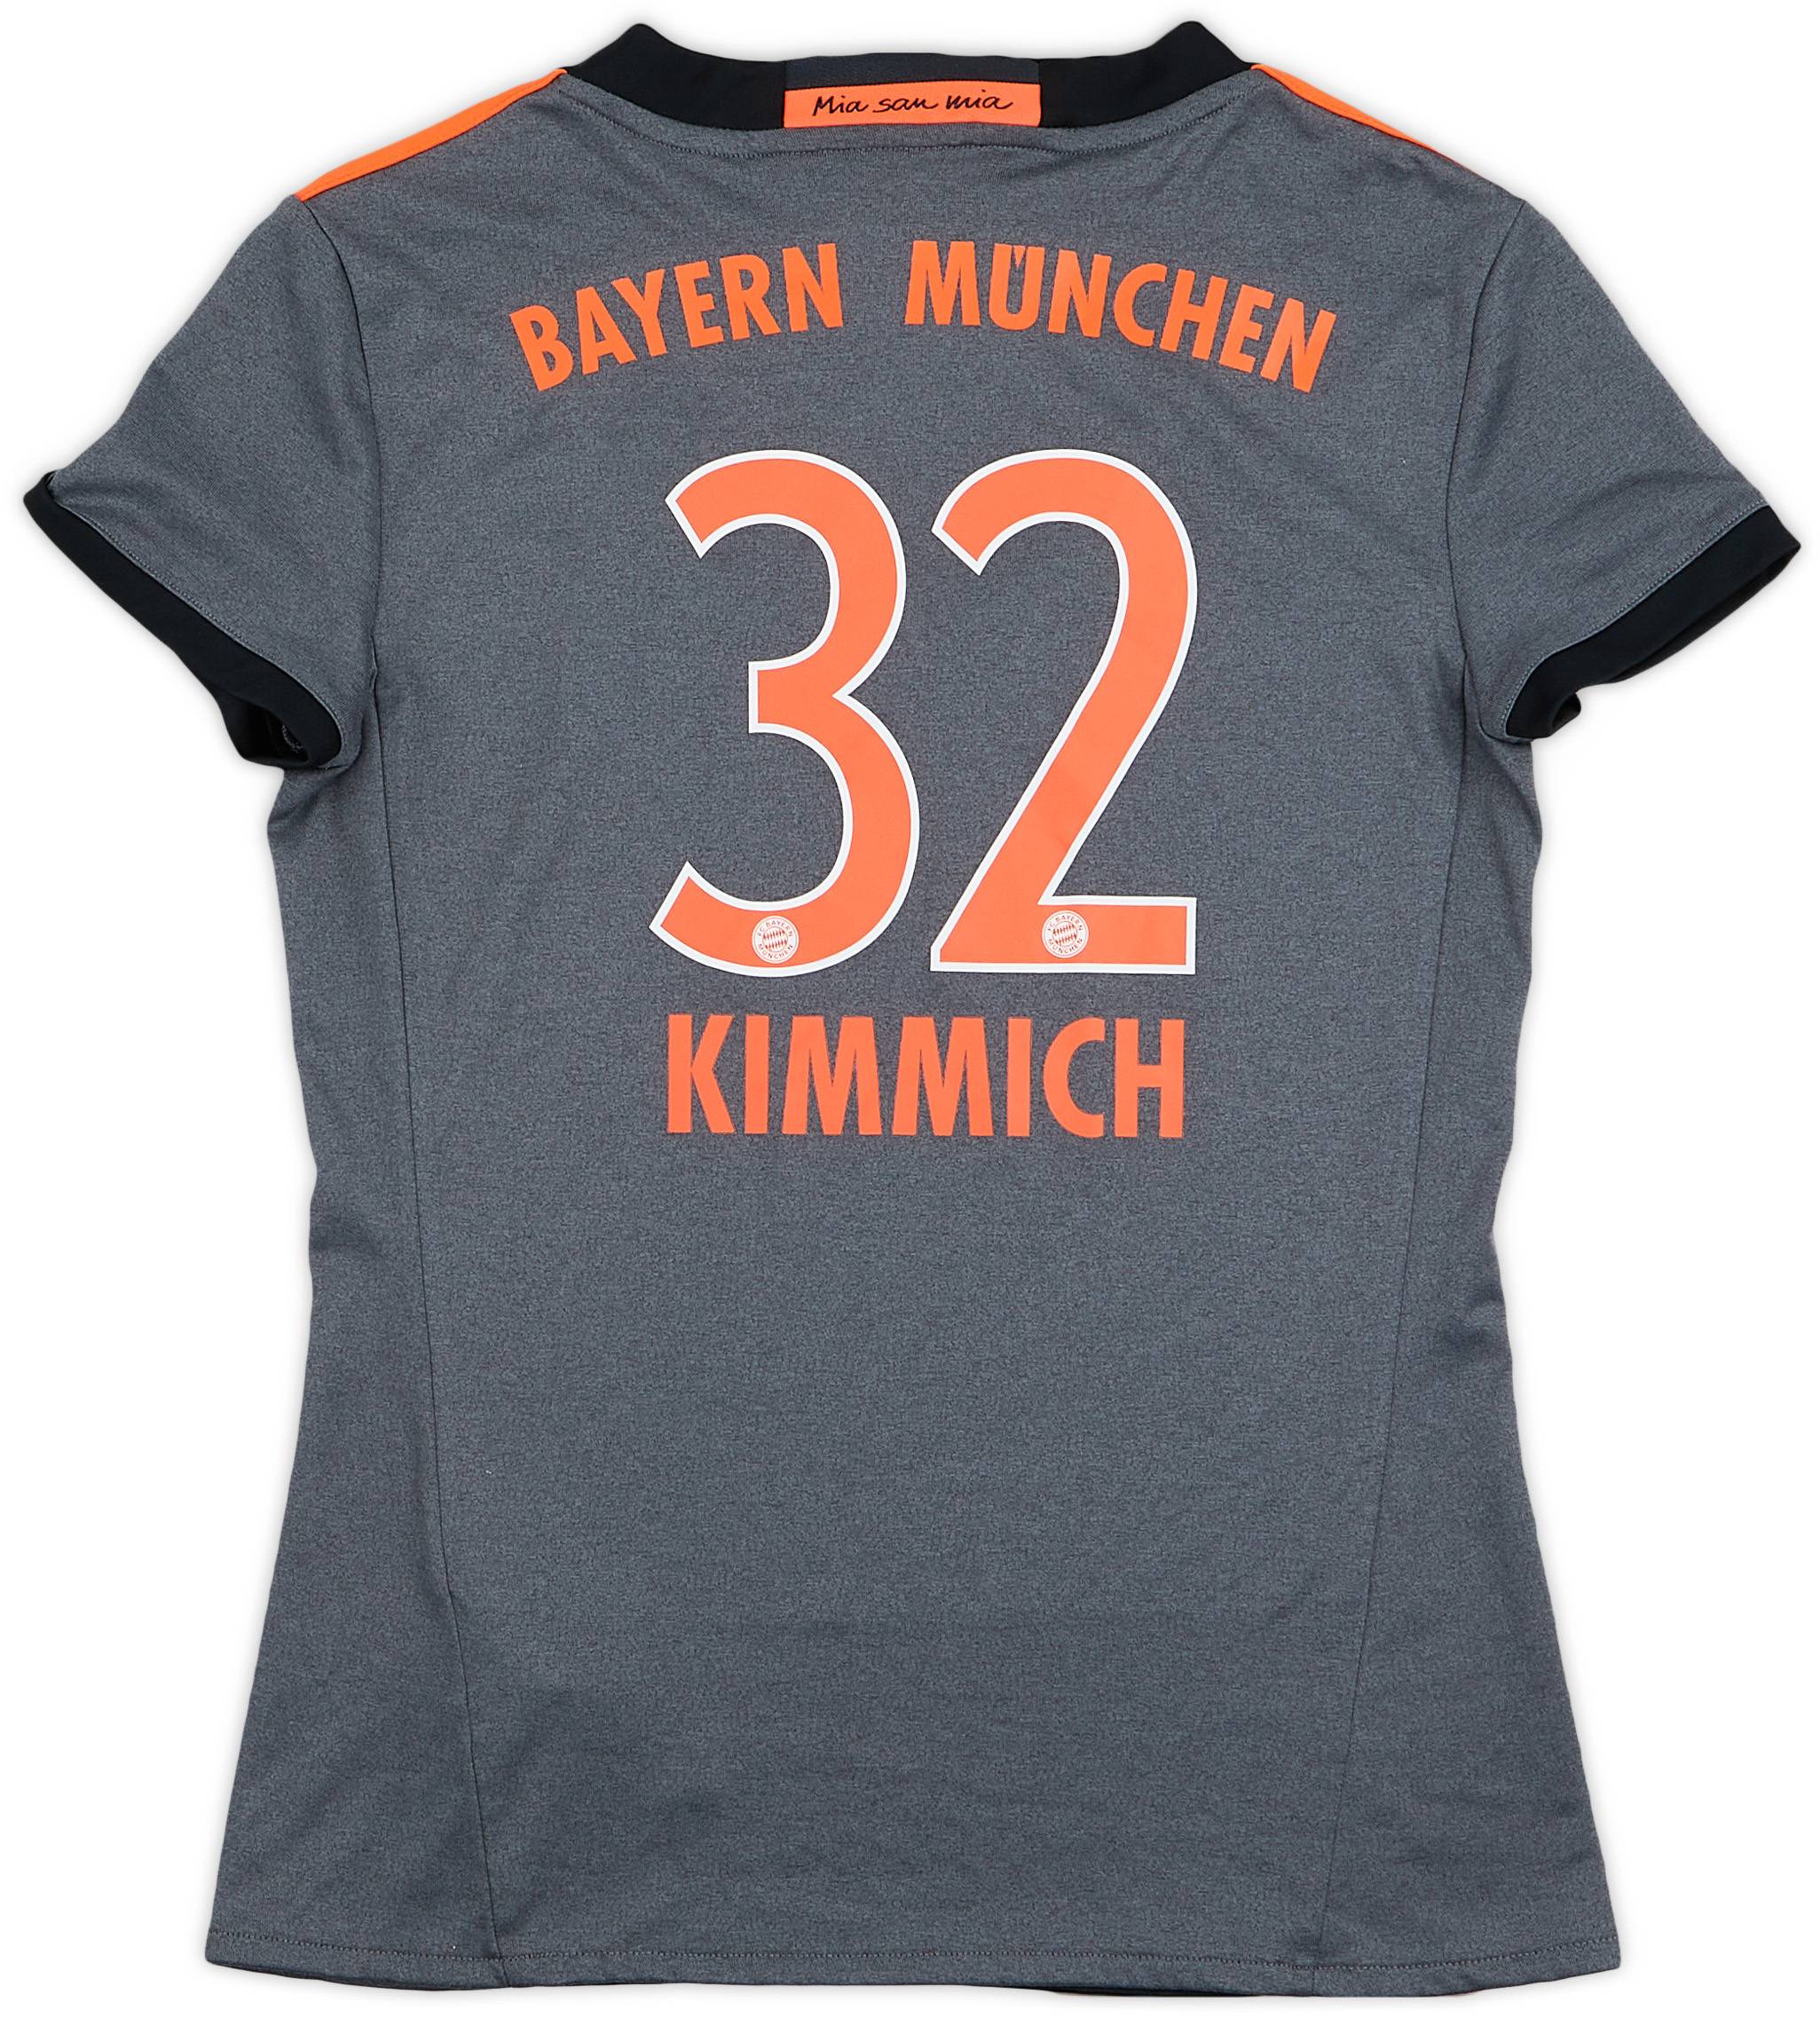 2016-17 Bayern Munich Away Shirt Kimmich #32 - 9/10 - (Women's S)